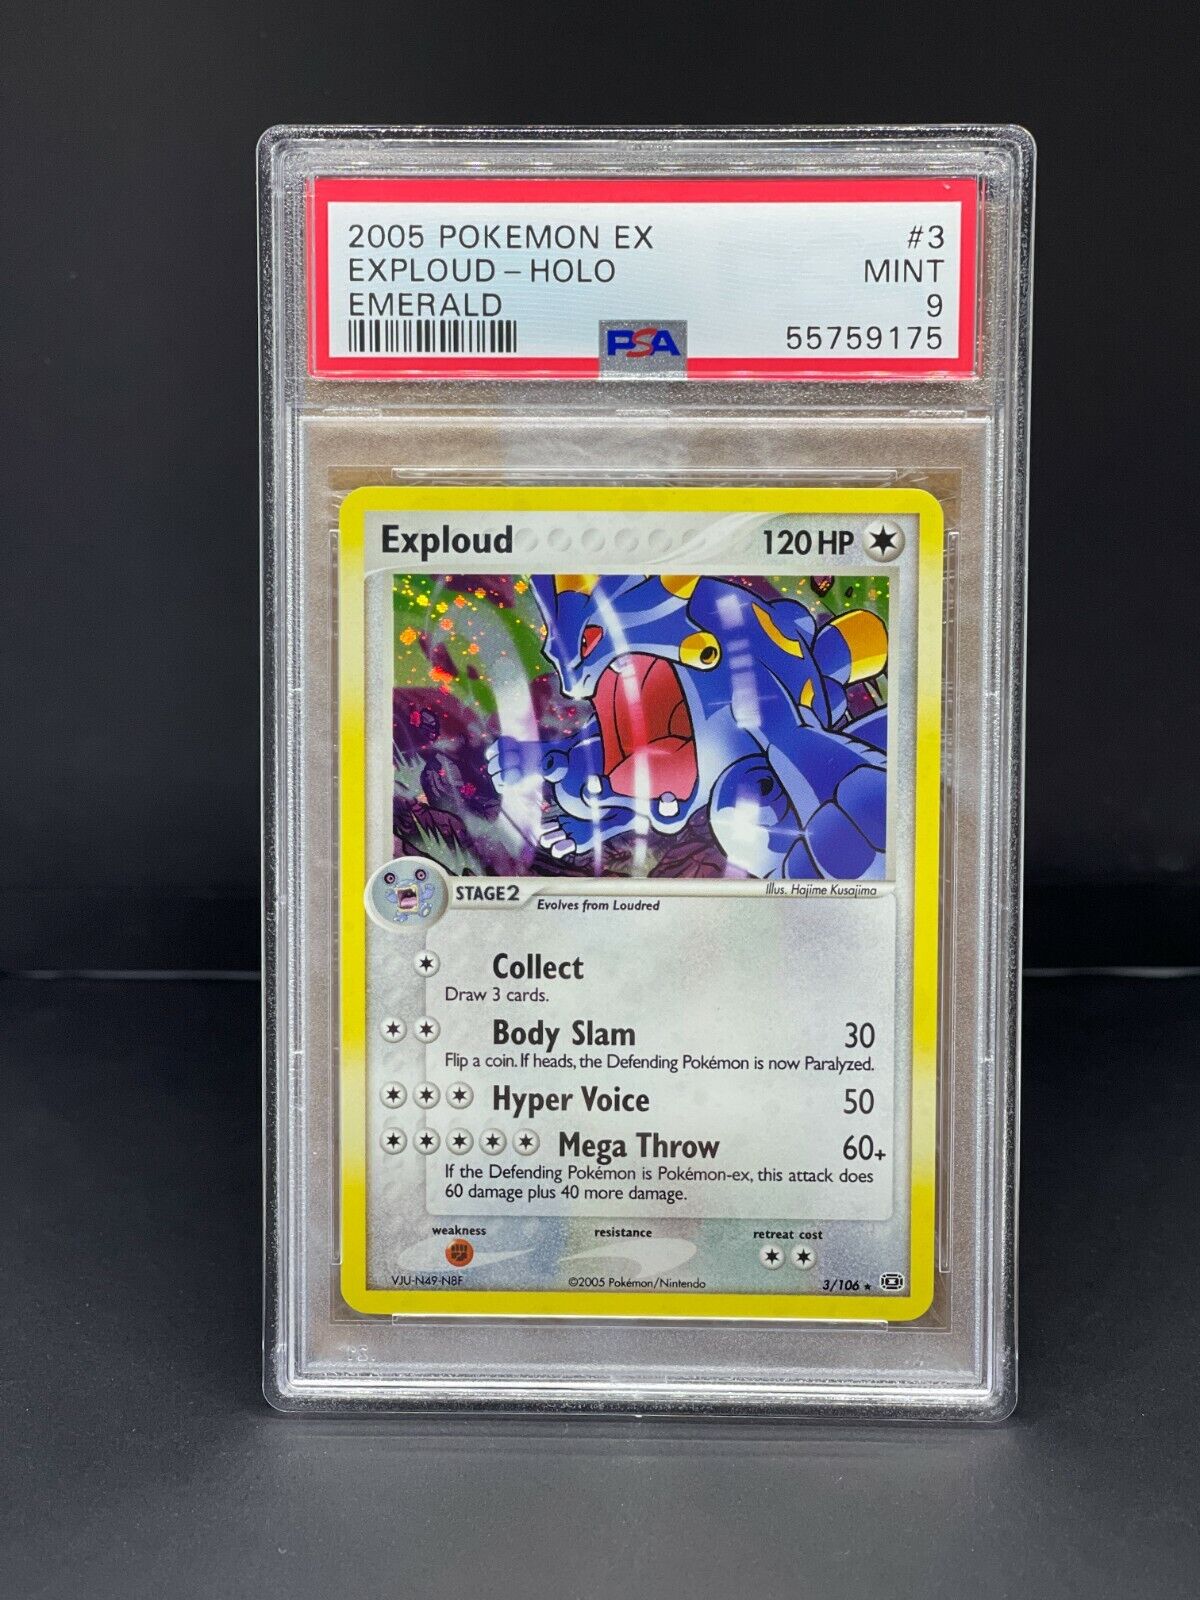 Pokemon Ex Emerald Exploud Holo Rare PSA 9 MINT #3 - Graded Card English 2005